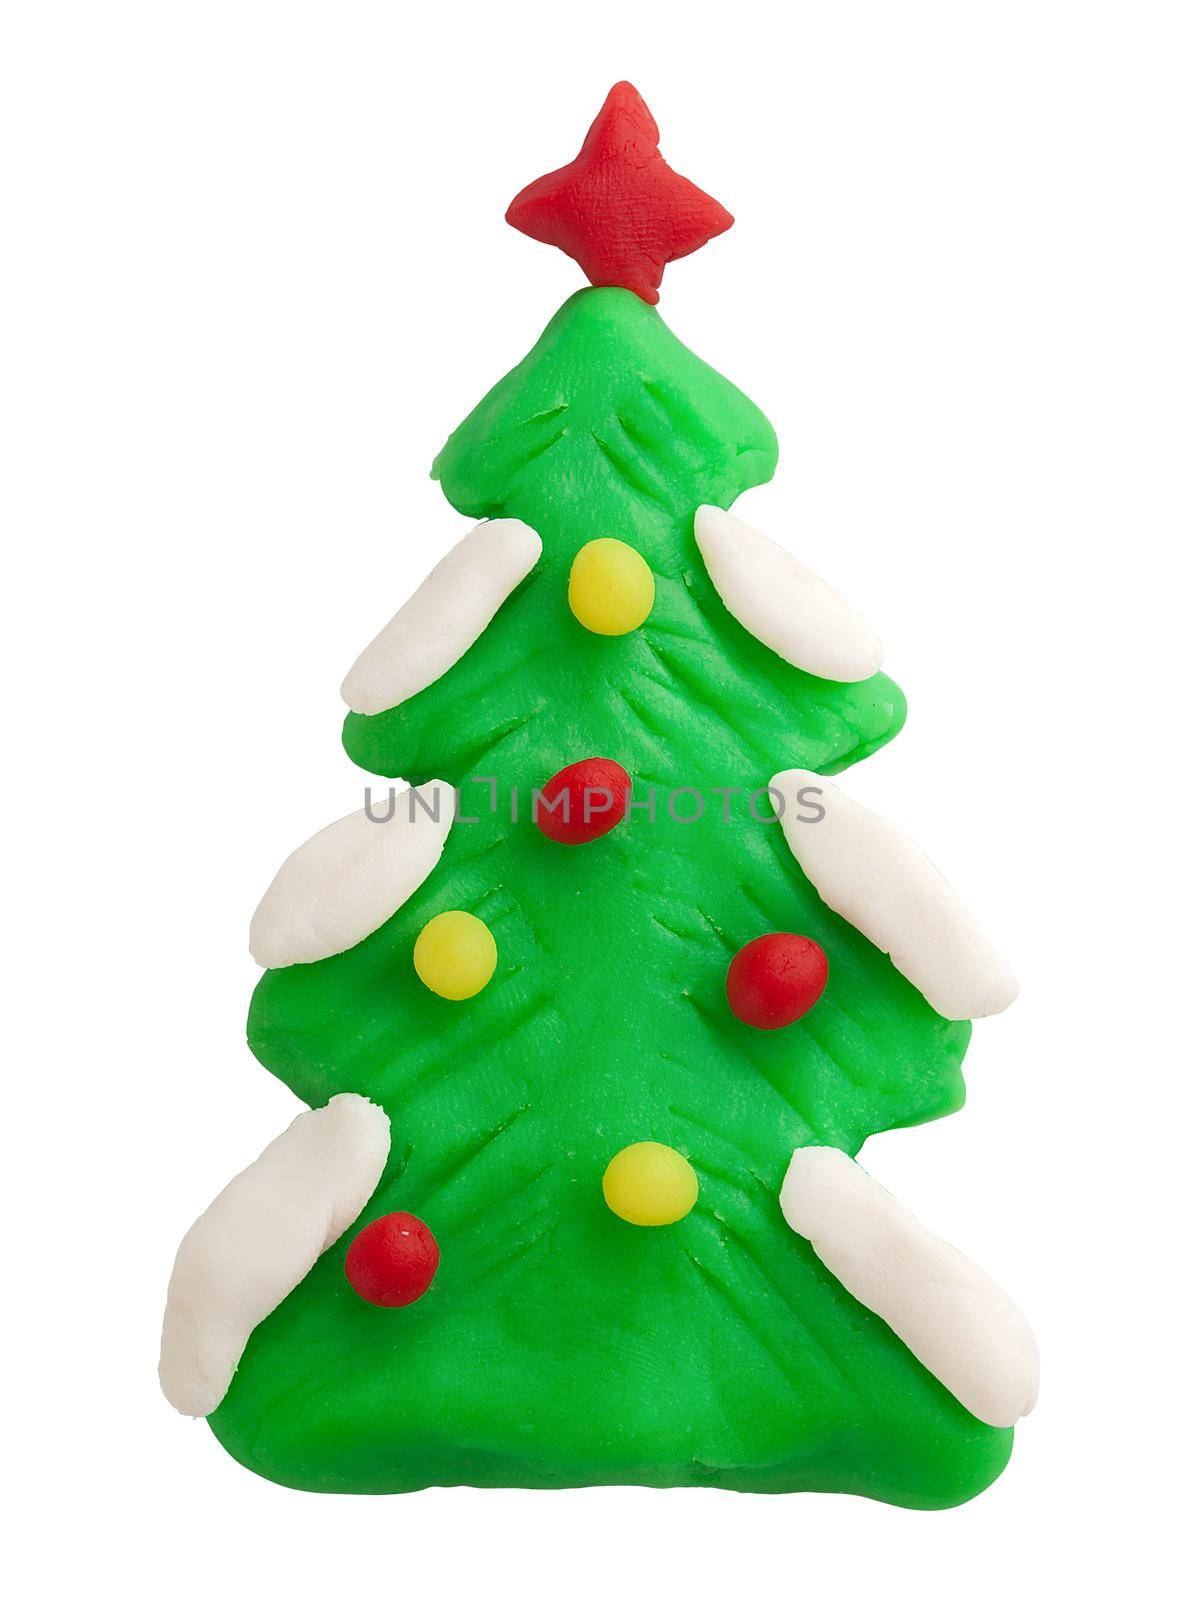 Plasticine christmass tree by Angorius